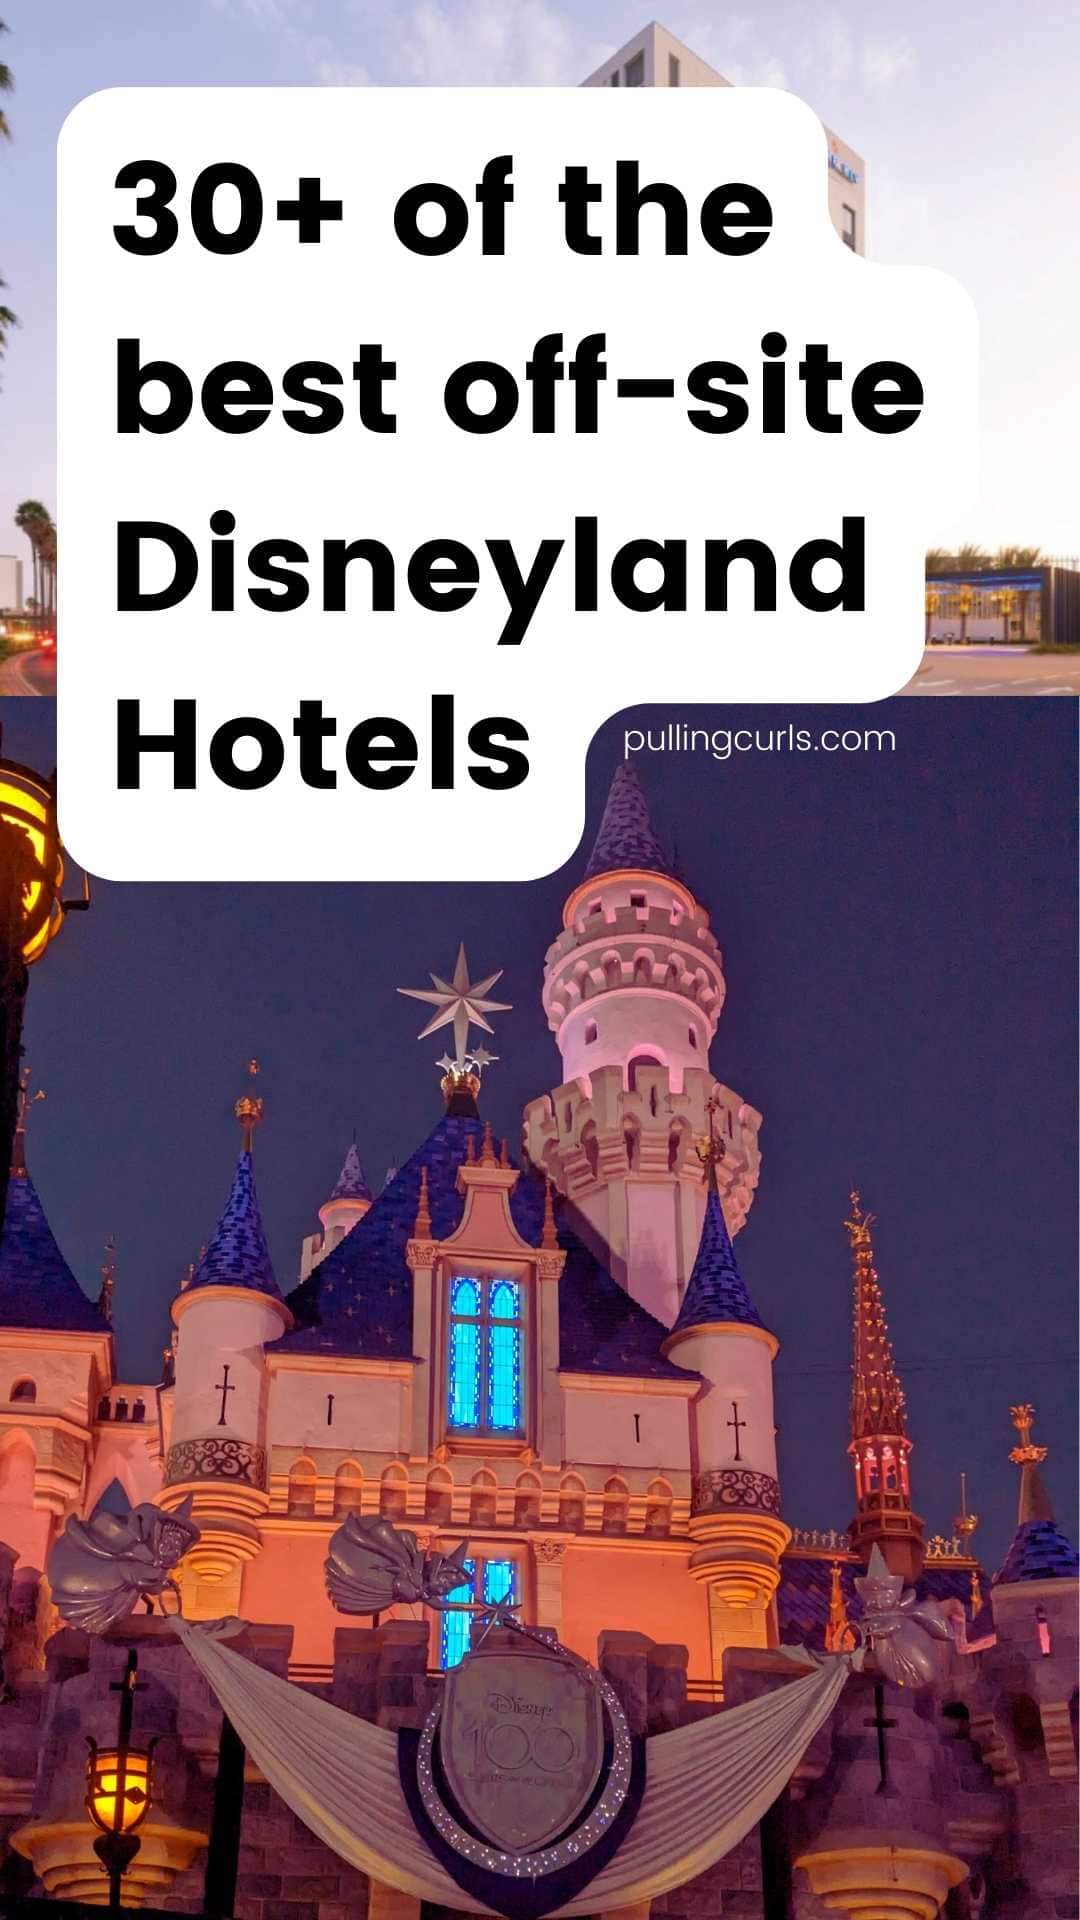 Disneyland Castele / 30+ of the best off-site Disneyland hotels via @pullingcurls